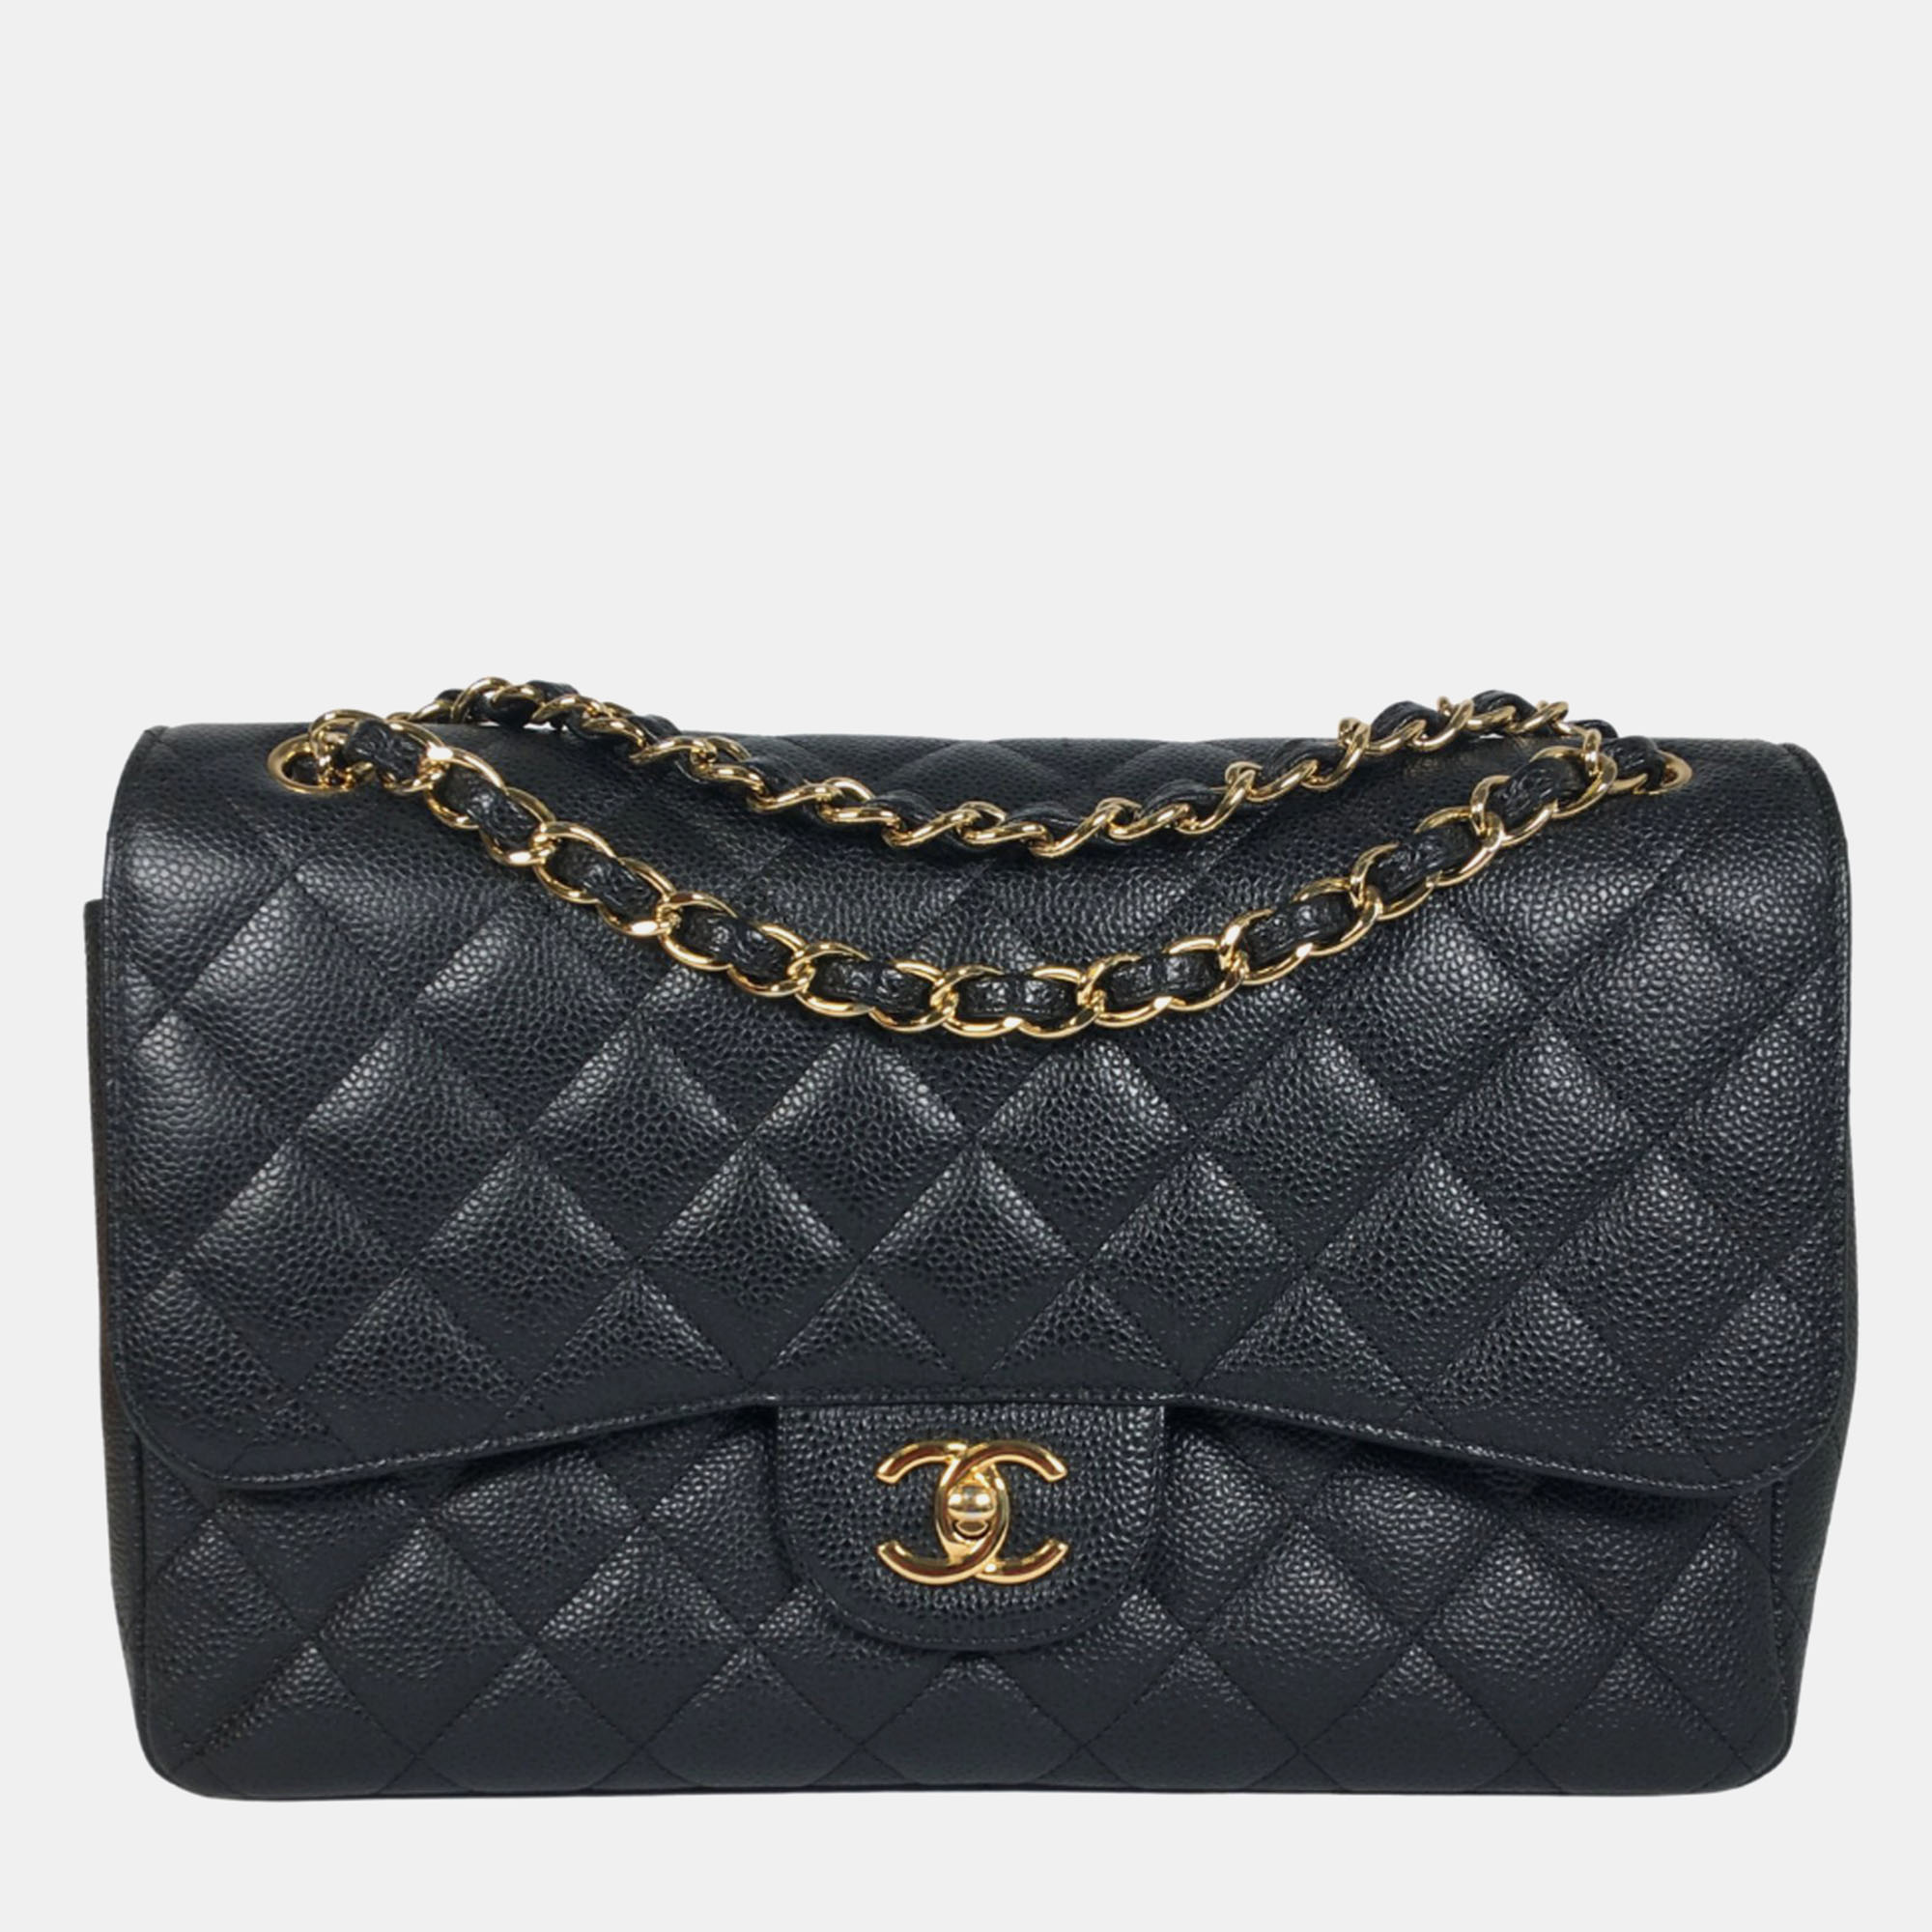 Chanel black caviar leather jumbo classic double flap shoulder bags